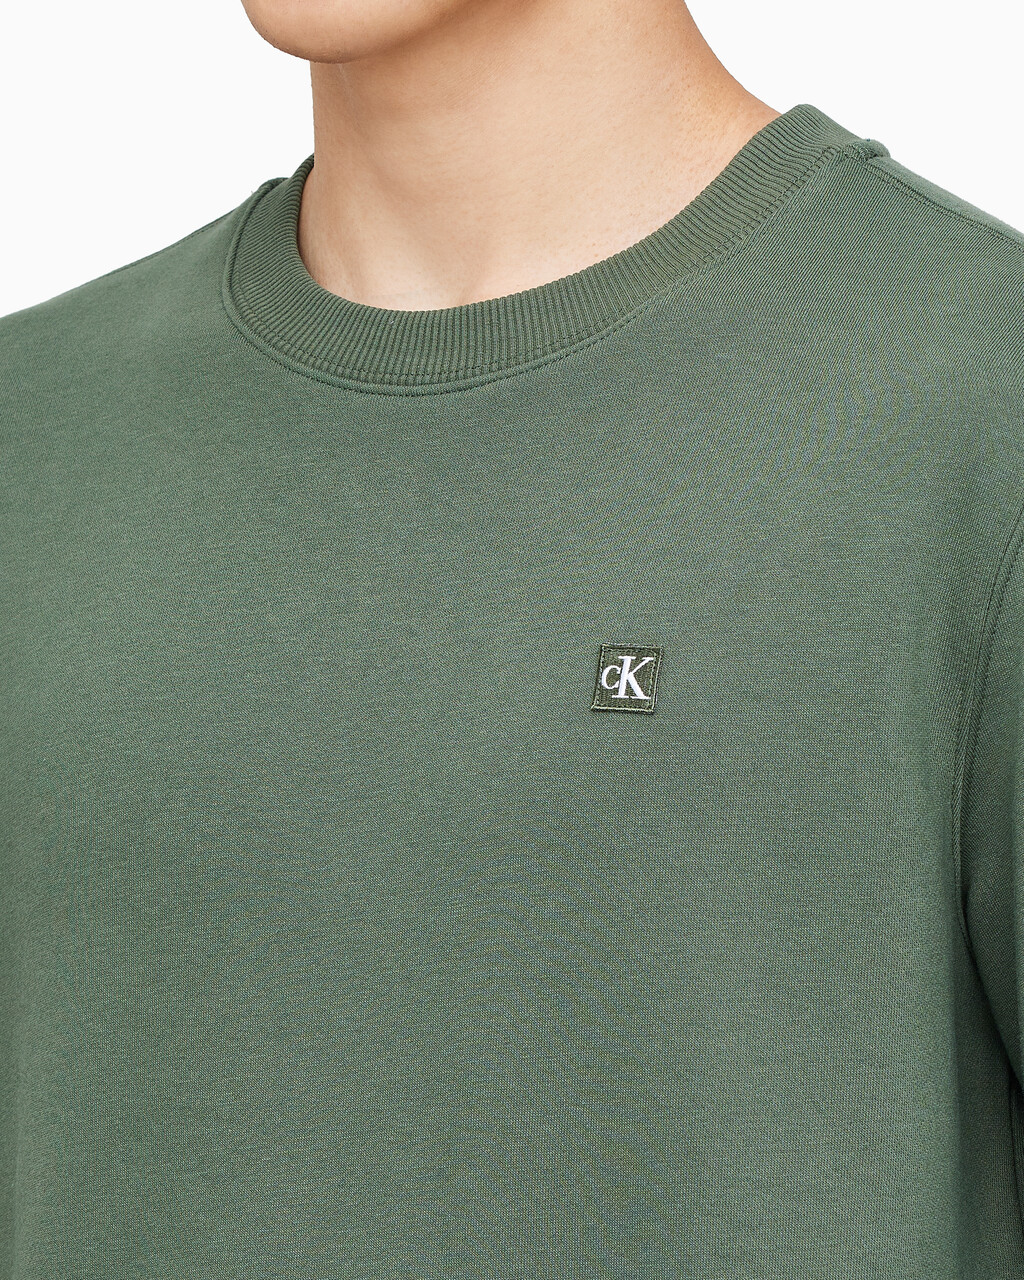 Buy 남성 레귤러핏 CK 뱃지 로고 기모 스웨트셔츠 in color KHAKI